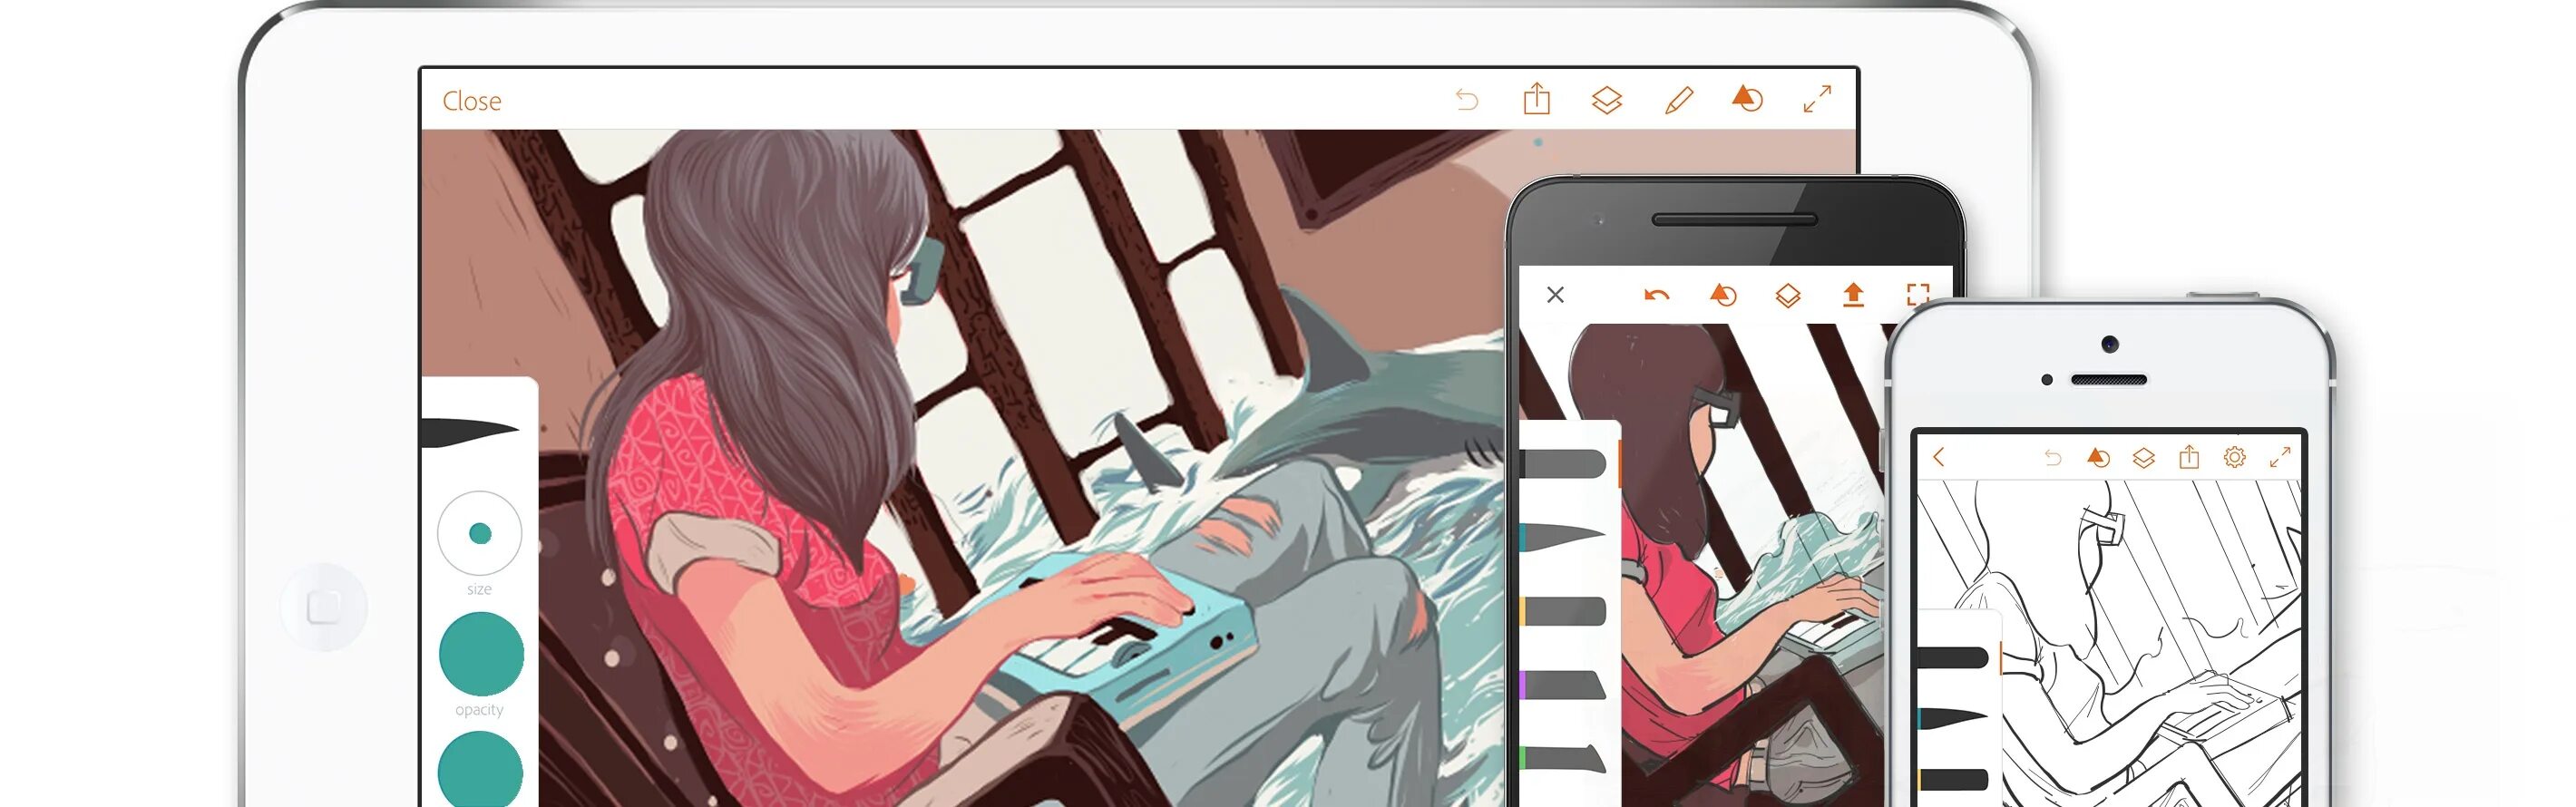 Draw на экране друга. Приложение иллюстрация. Иллюстратор на андроид. Adobe Illustrator для планшета Android. Рисунки на айпаде.